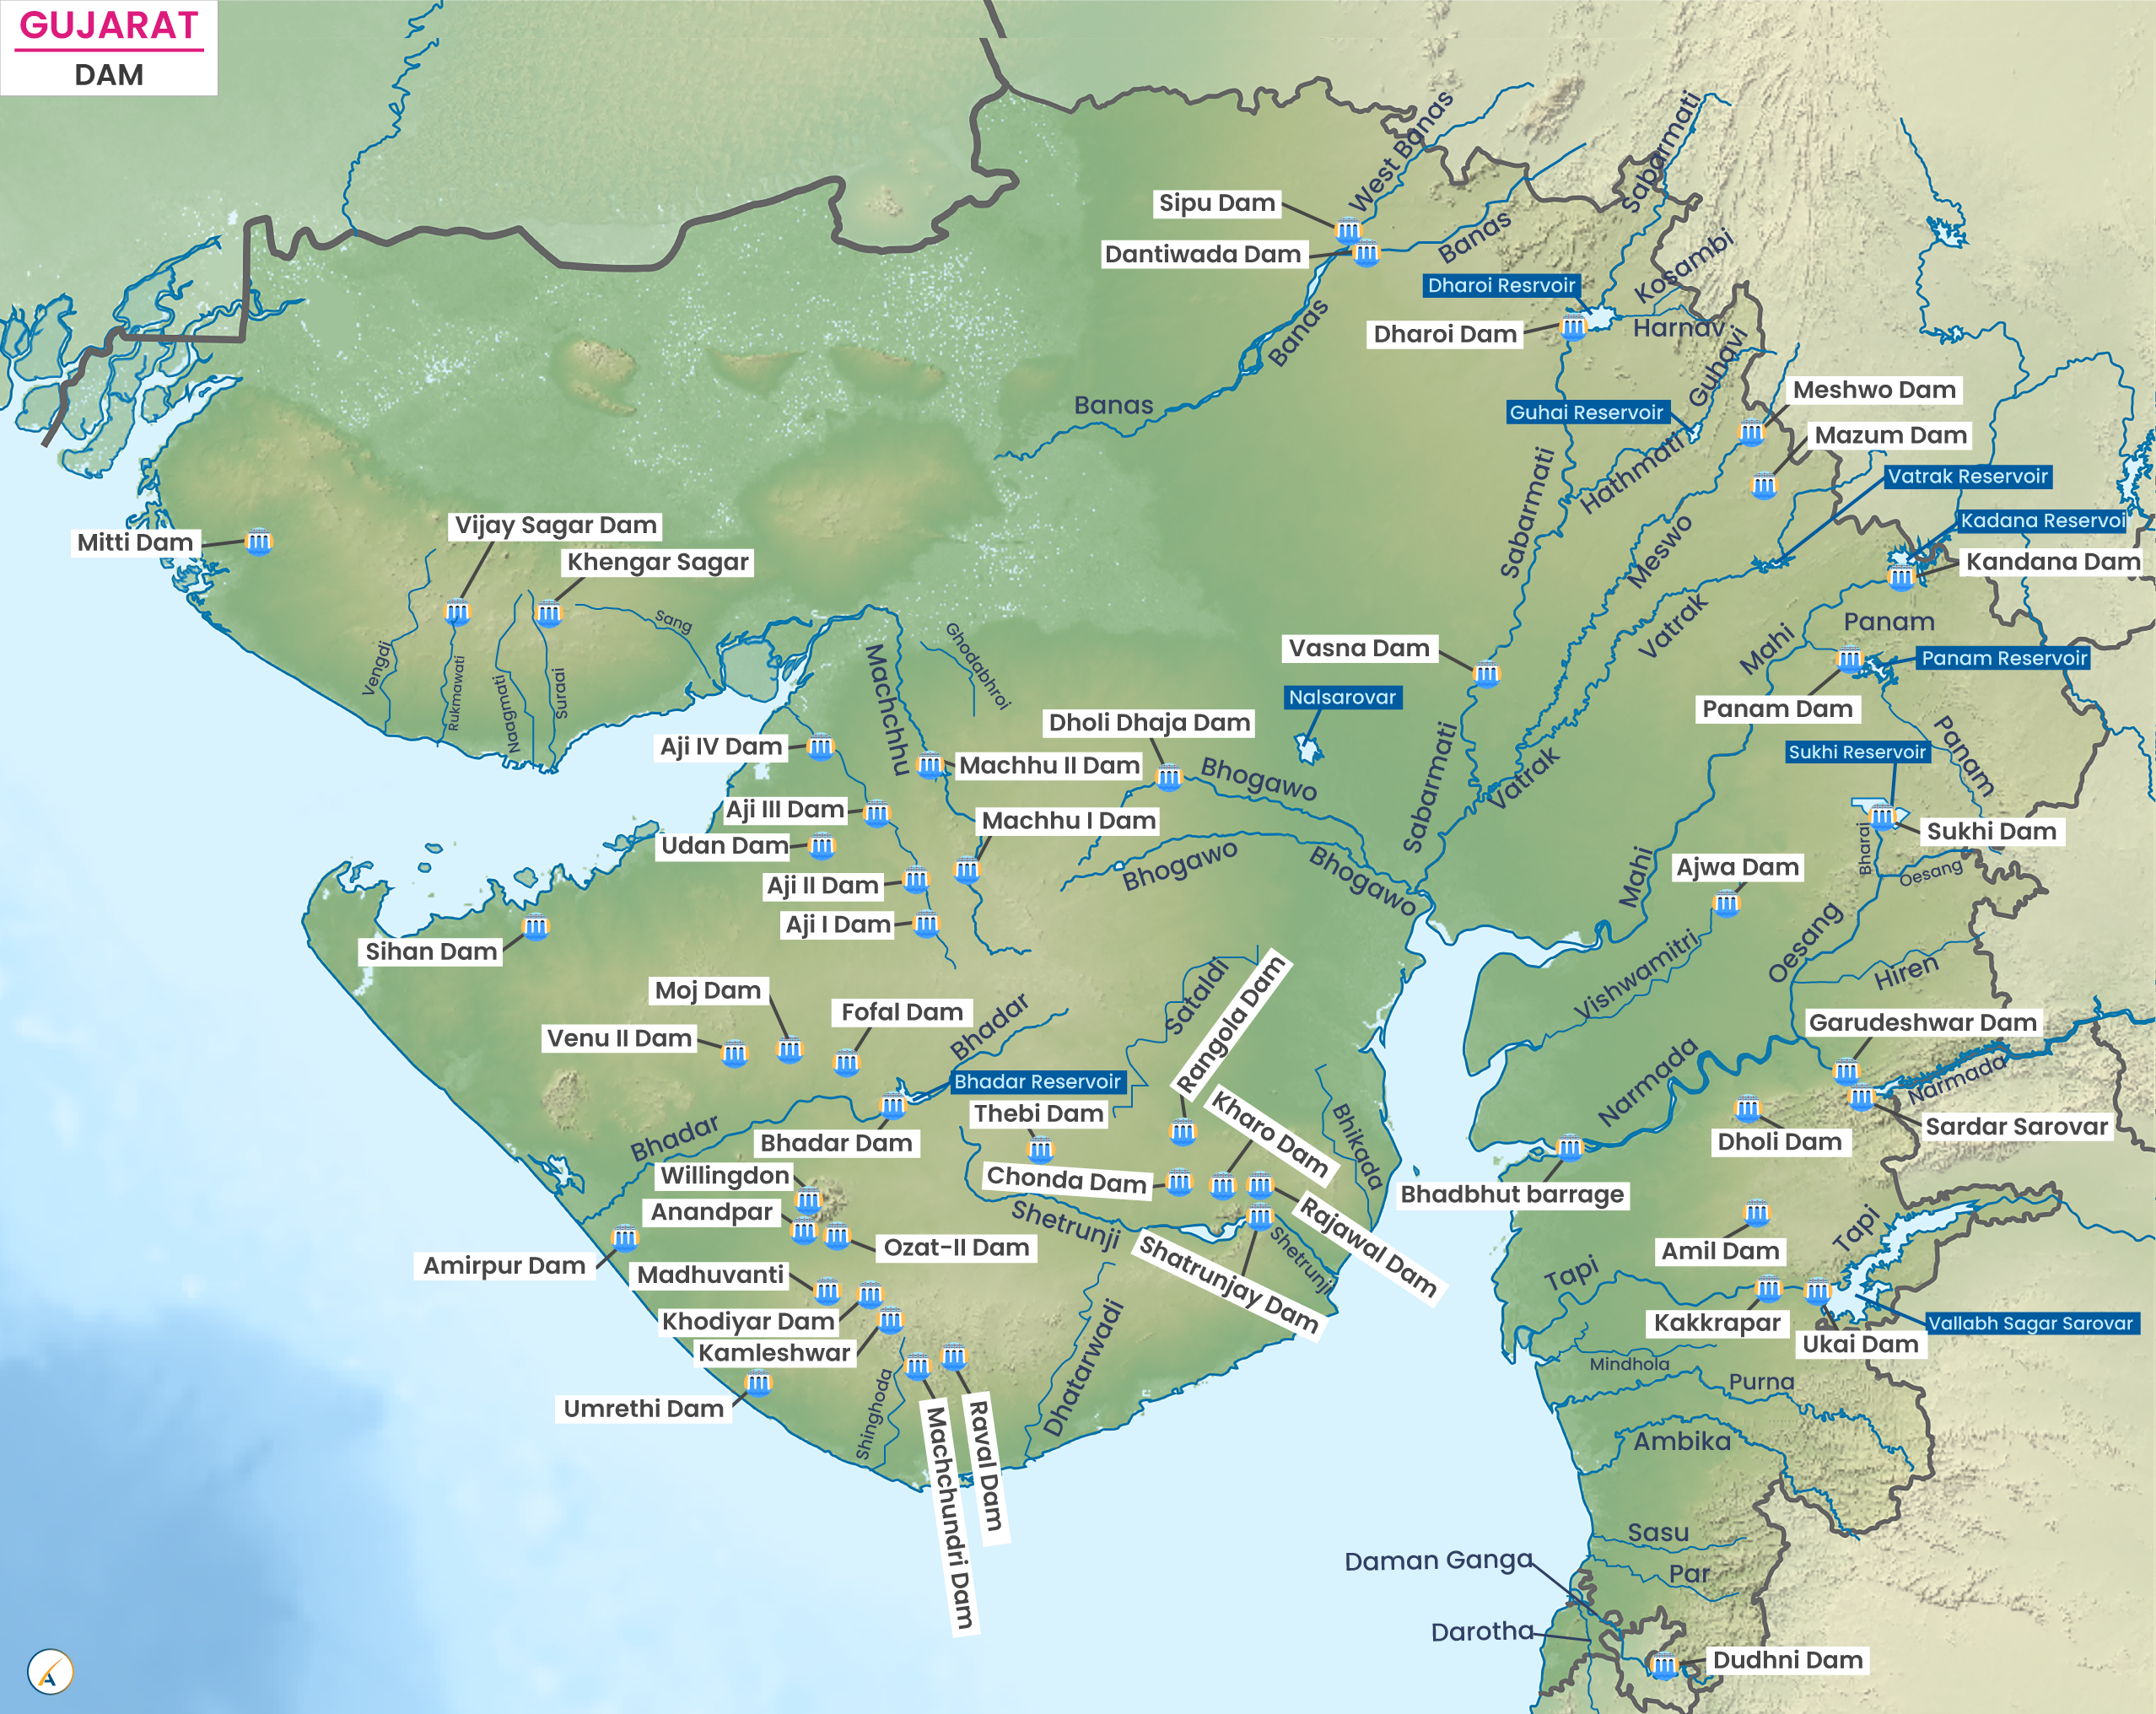 Major Dams in Gujarat